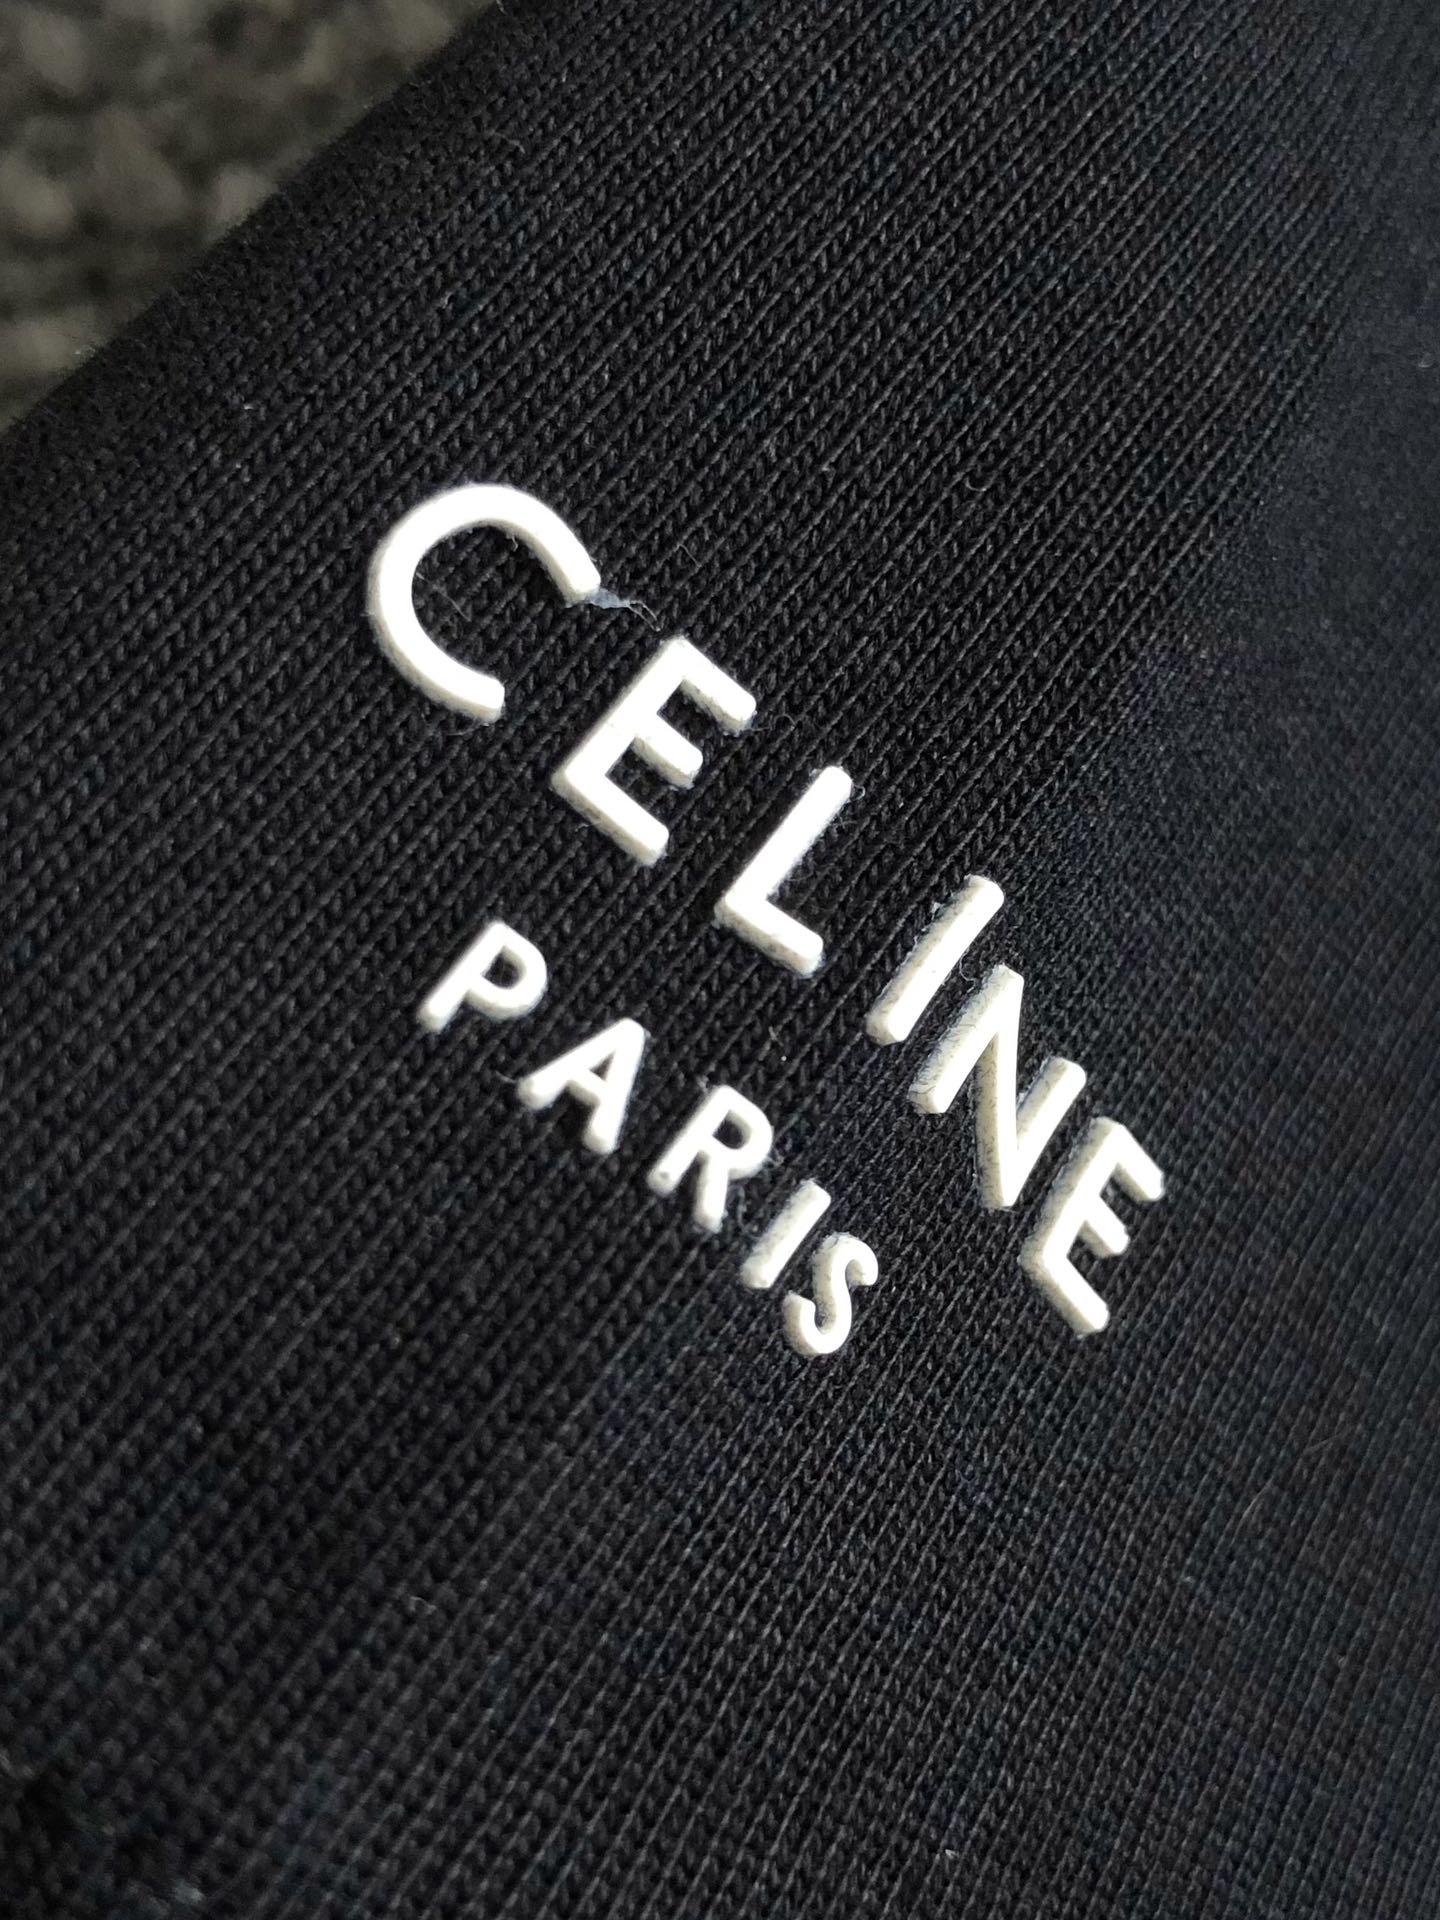 Cin*合身版型S-Xl最新最顶级版本简约款刺绣潮流短袖最顶级的品质专柜原单短袖顶级制作工艺进口面料专柜